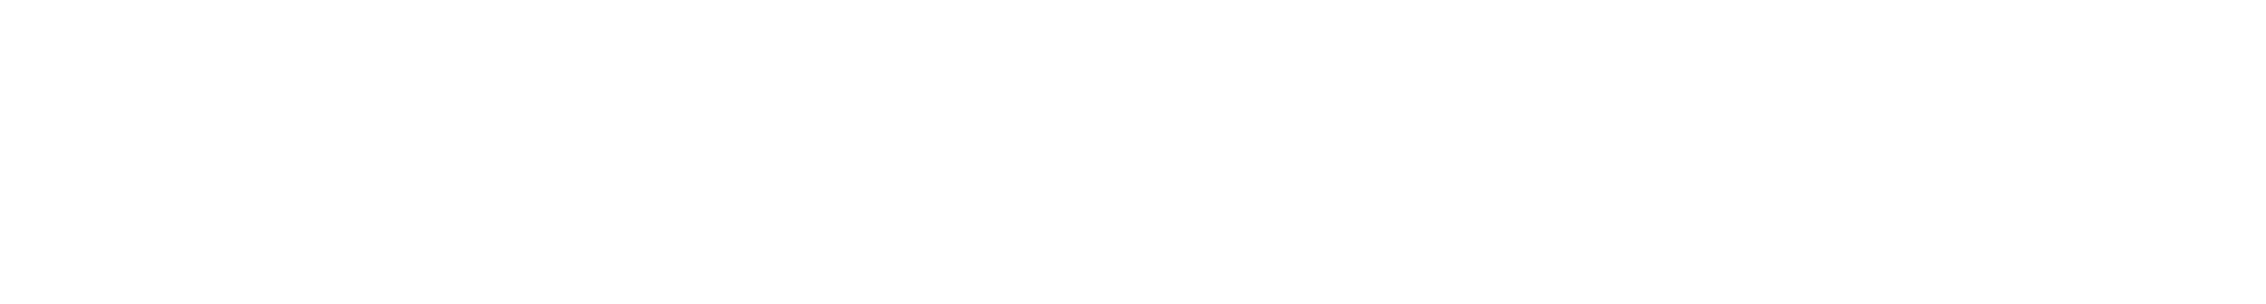 EDGEPLANT_logo